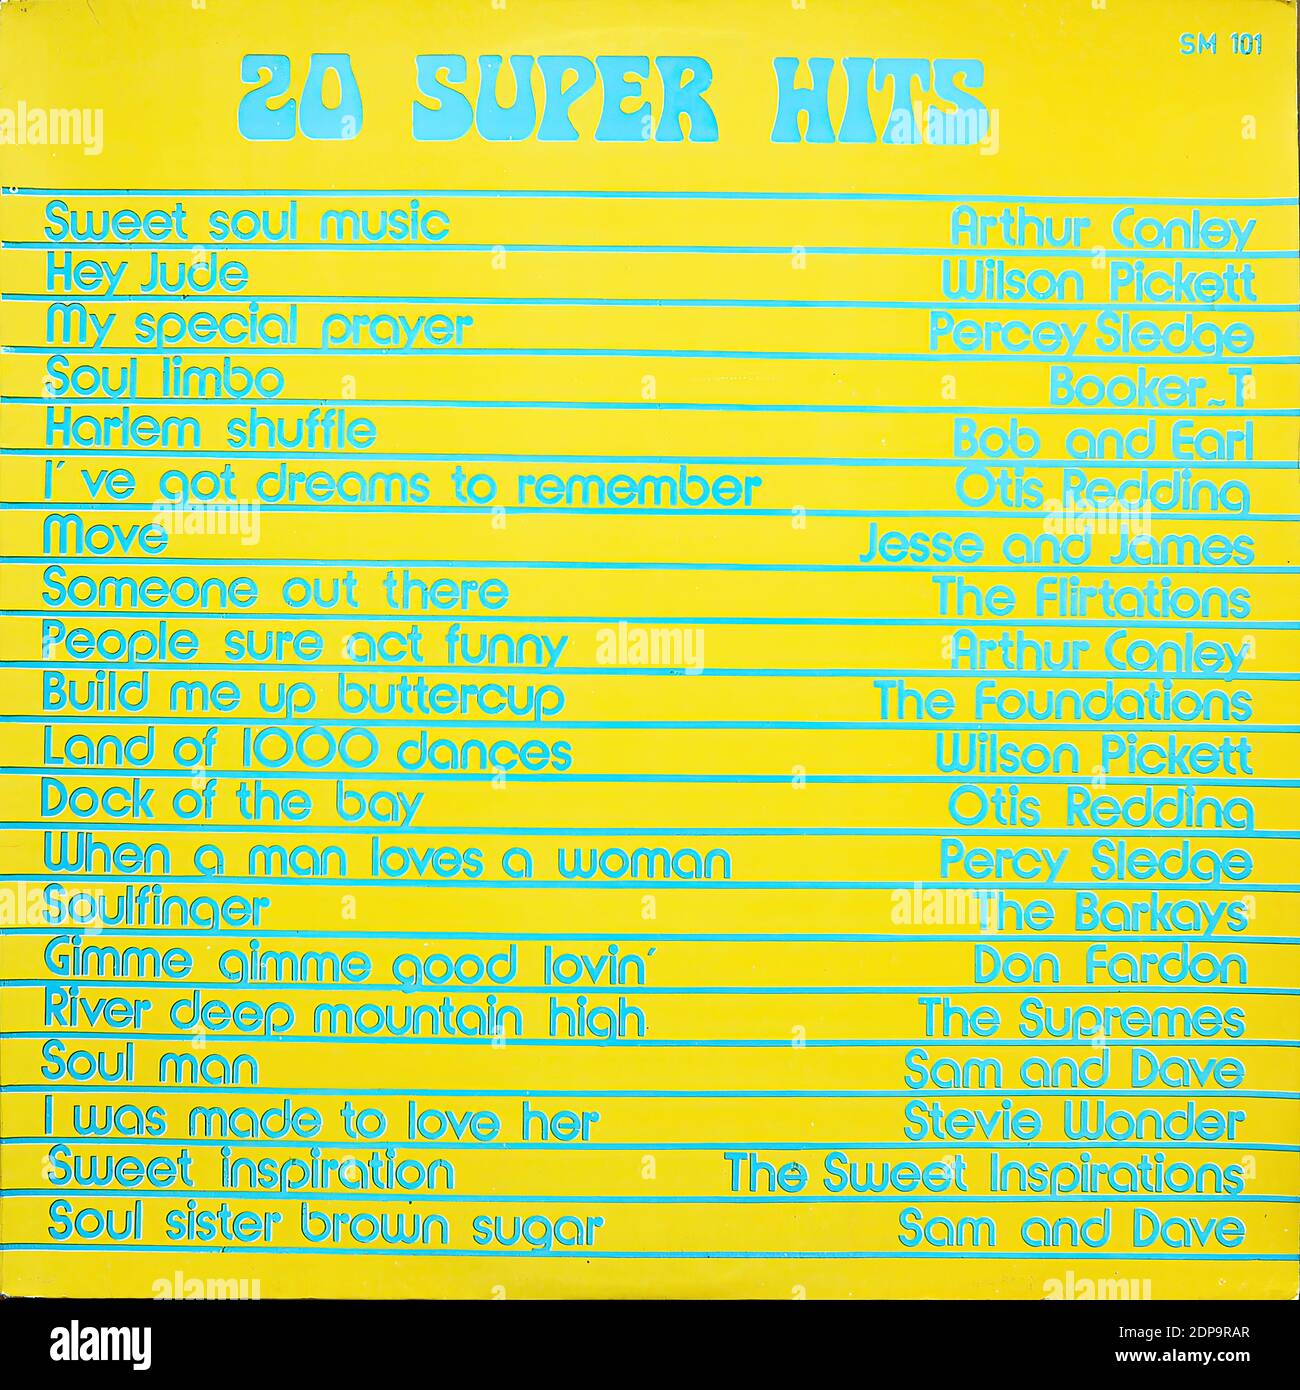 Soul Music - 20 Super Hits, SM 101 - Vintage Vinyl Album Cover Stockfoto